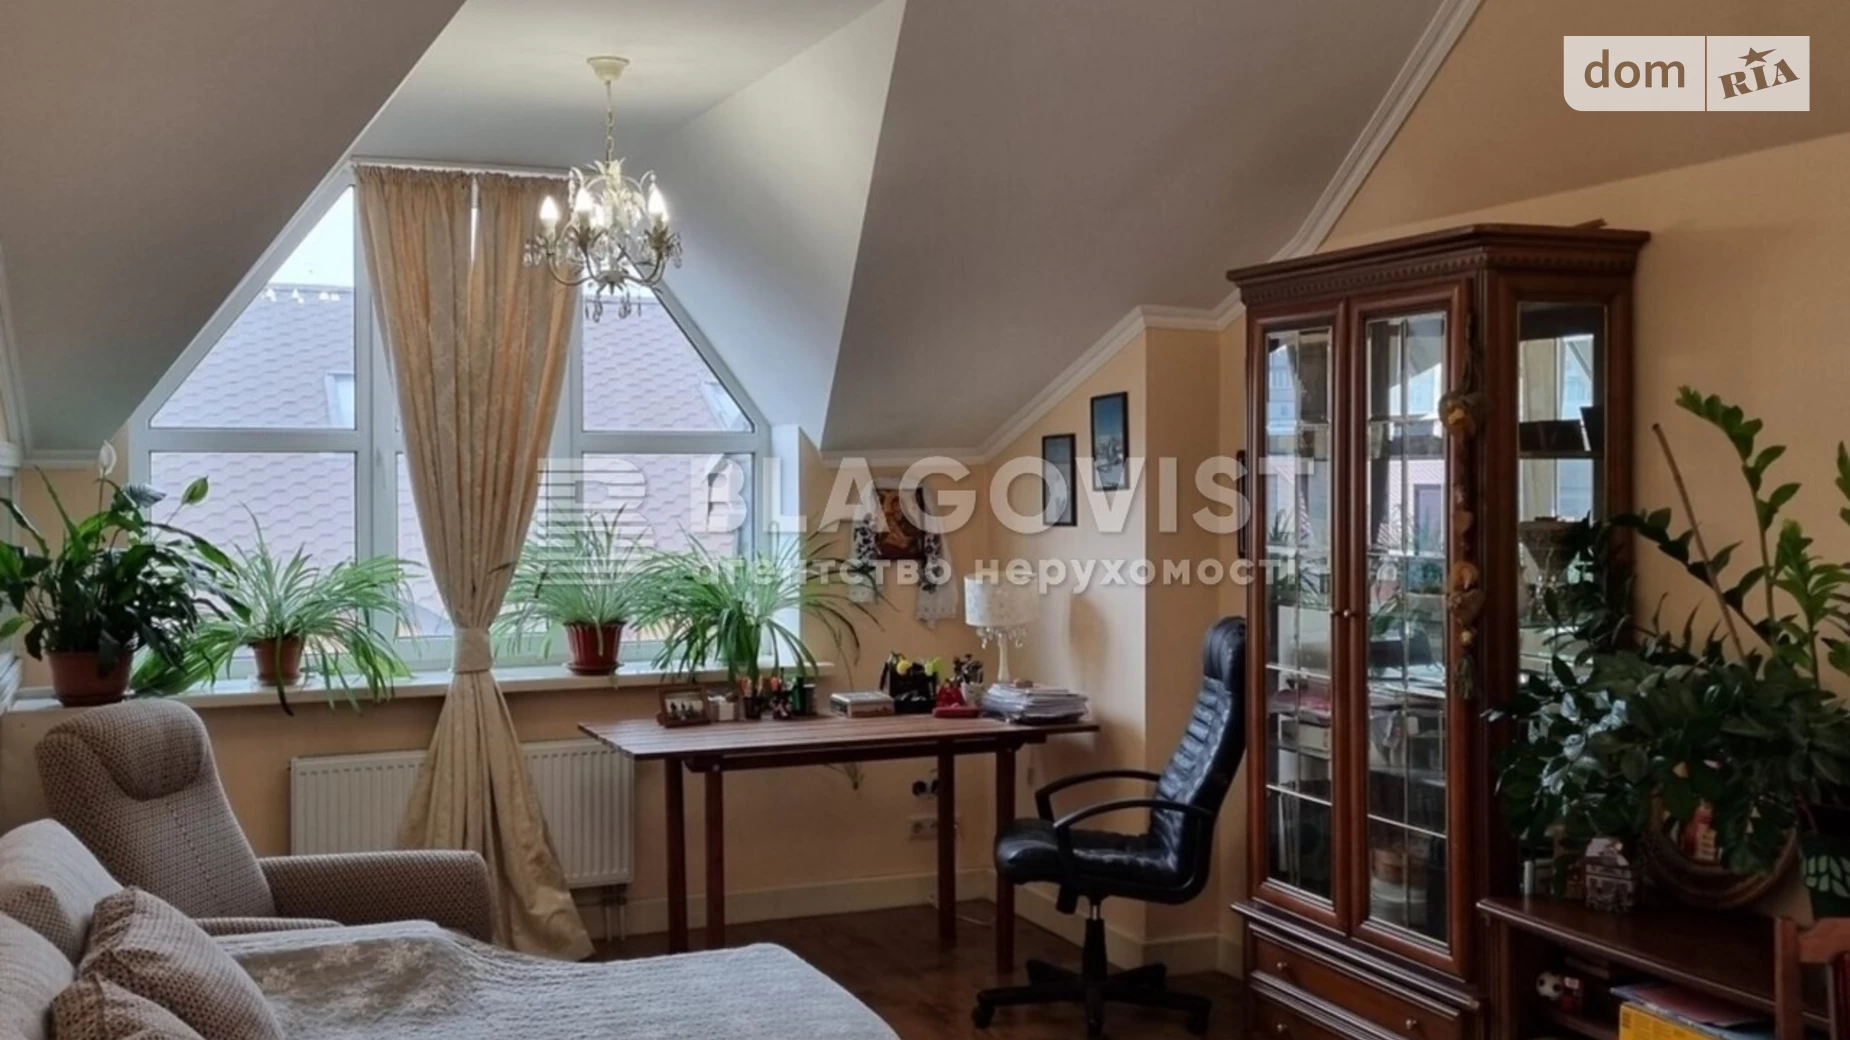 Продается 2-комнатная квартира 88.2 кв. м в Киеве, ул. Отто Шмидта - фото 4